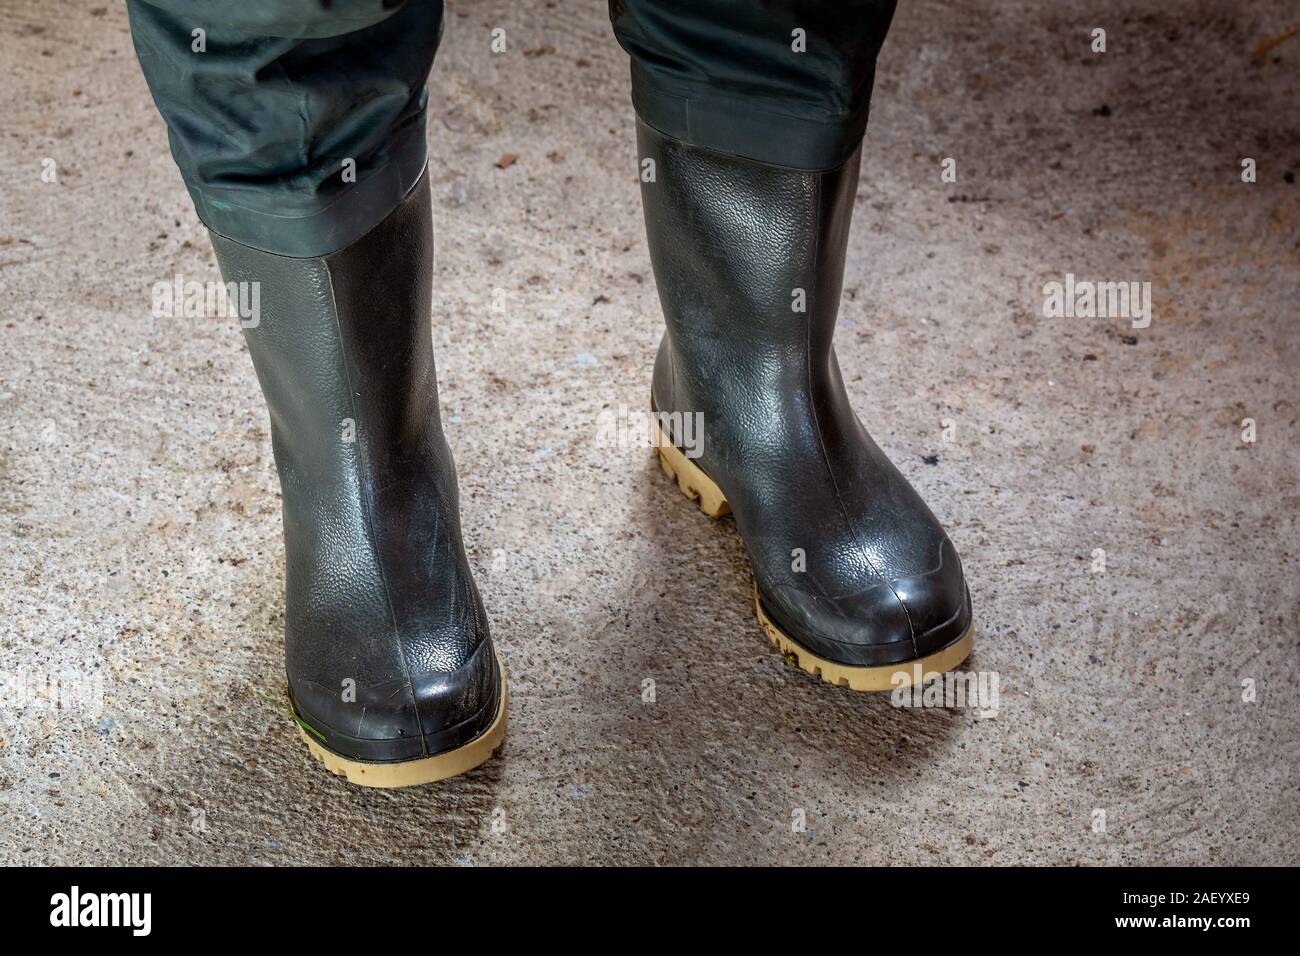 https://c8.alamy.com/comp/2AEYXE9/fisherman-rubber-waterproof-boots-for-fishing-2AEYXE9.jpg